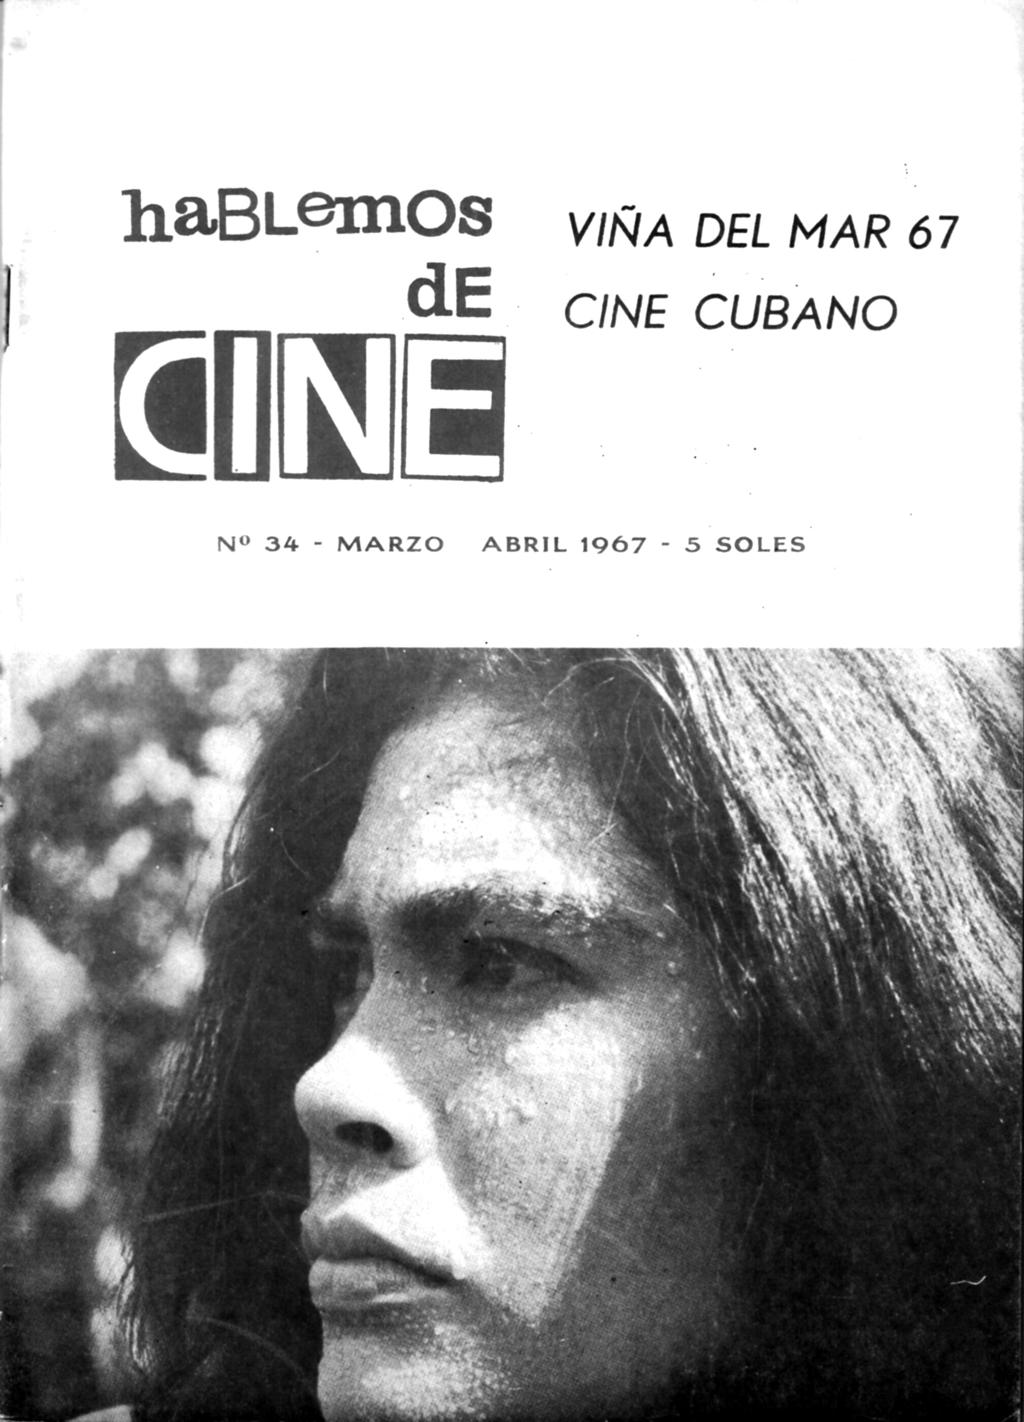 Latin American Dis/Connections 99 Figure 9: Cover of Hablemos de cine 34